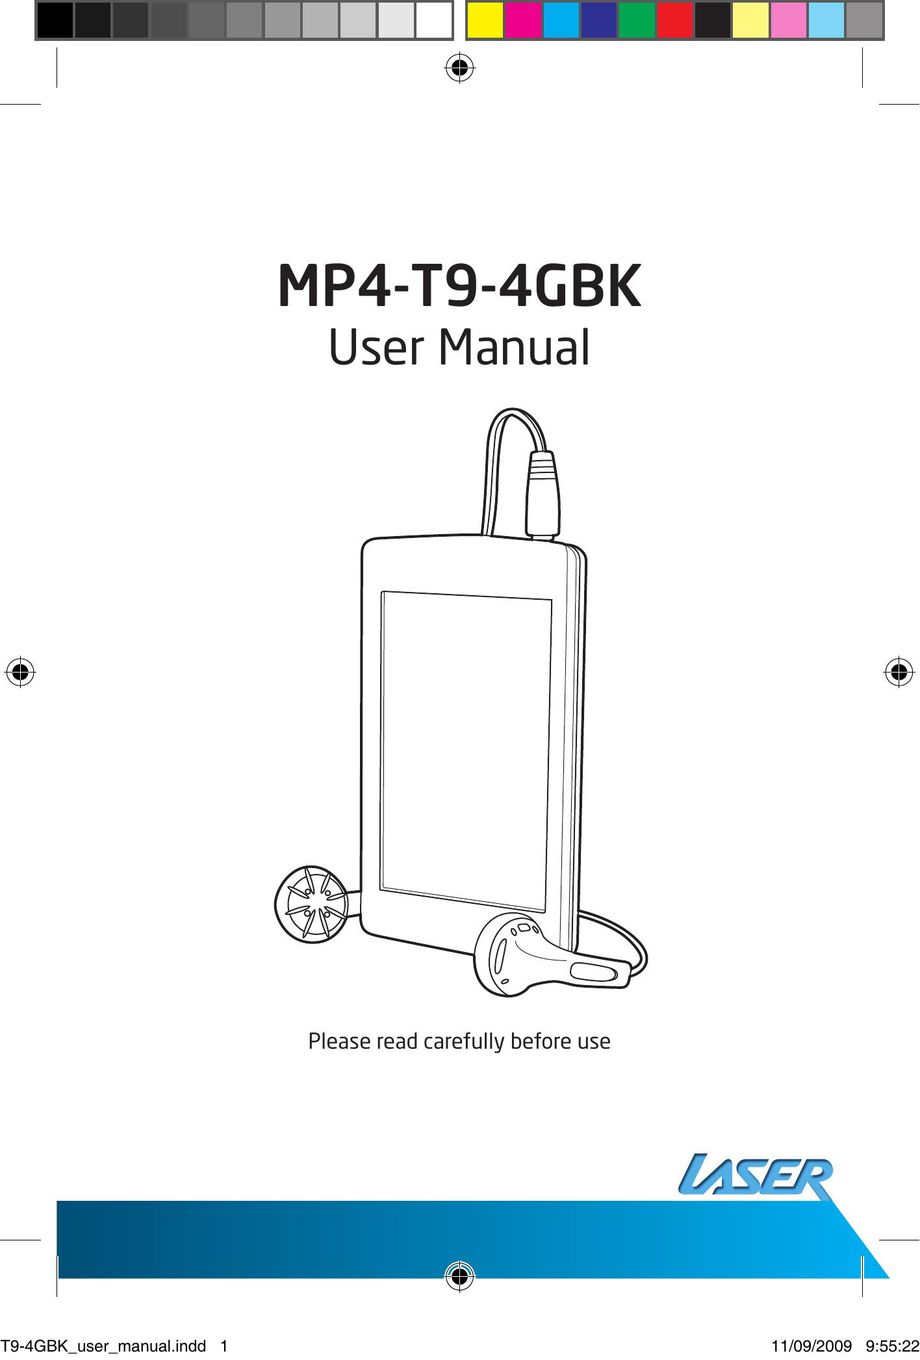 Laser MP4-T9-4GBK MP3 Player User Manual